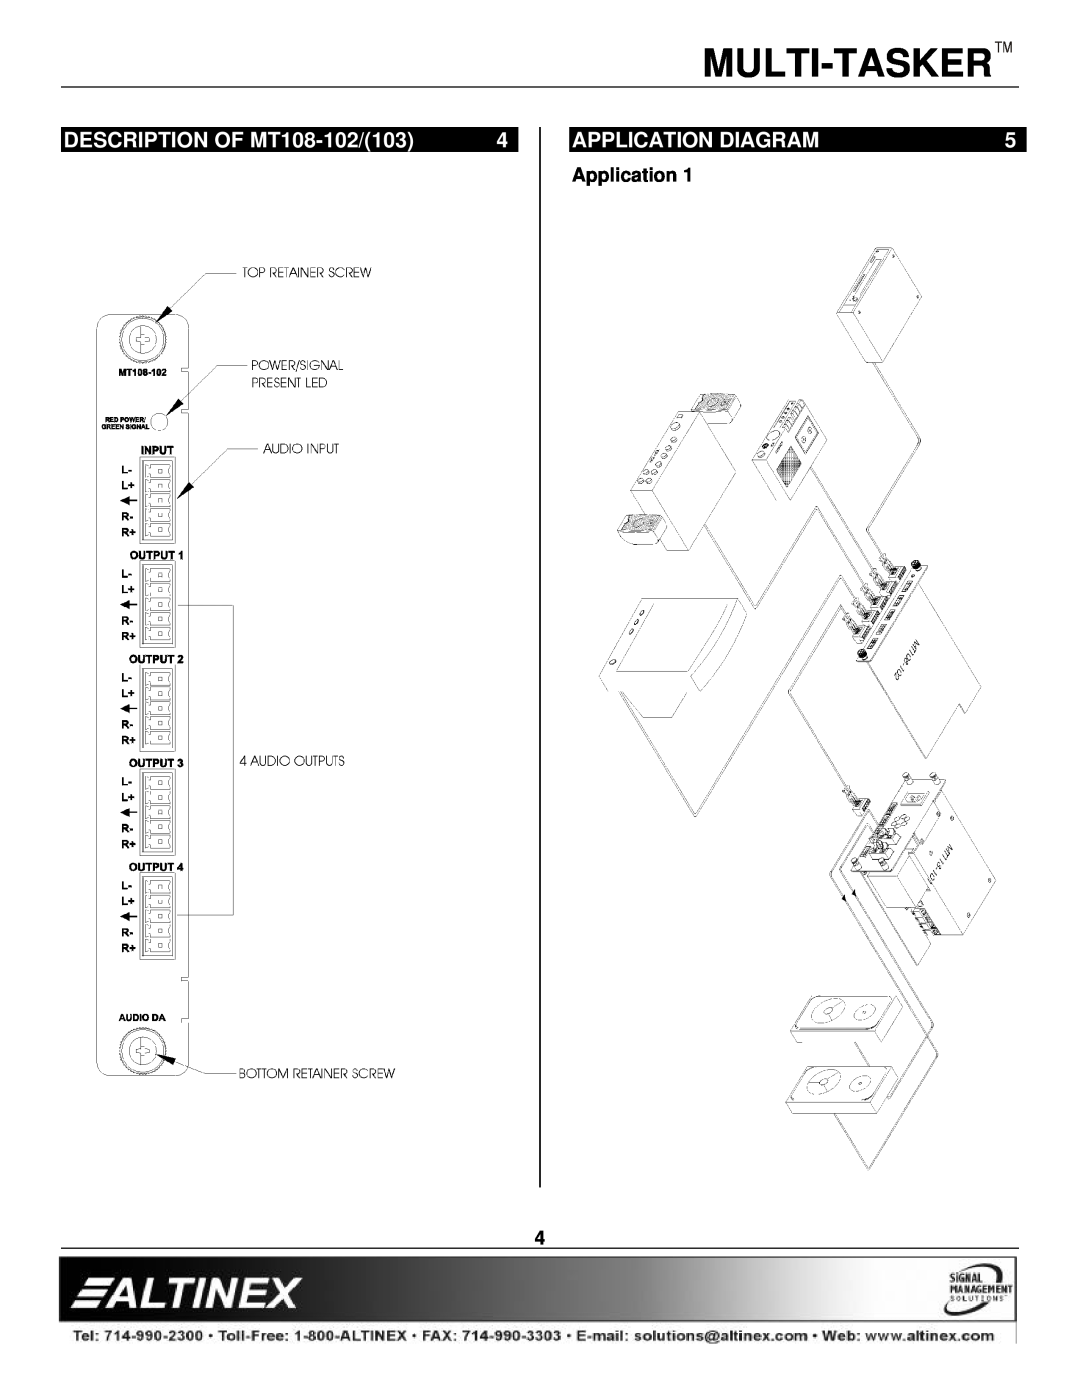 Altinex manual DESCRIPTION OF MT108-102/103, Application Diagram, Multi-Tasker 